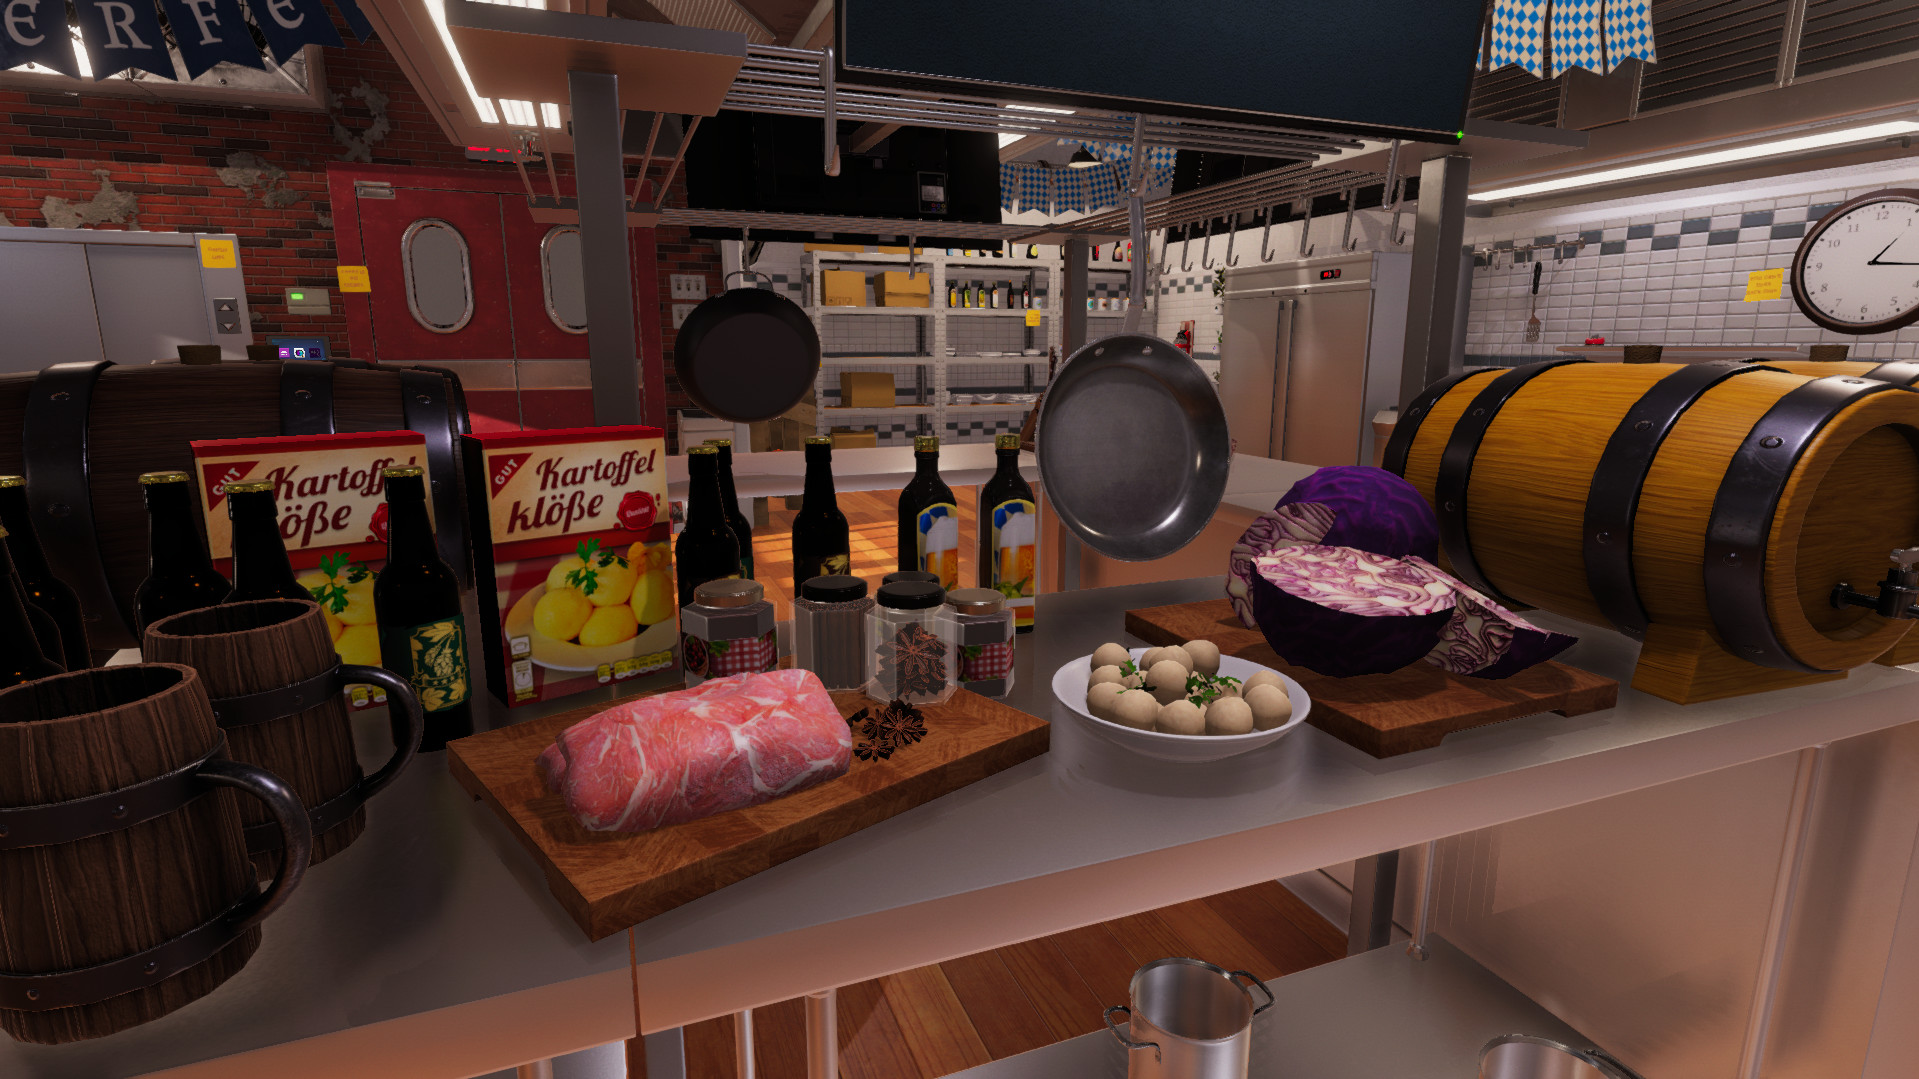 Buy Cooking Simulator Steam